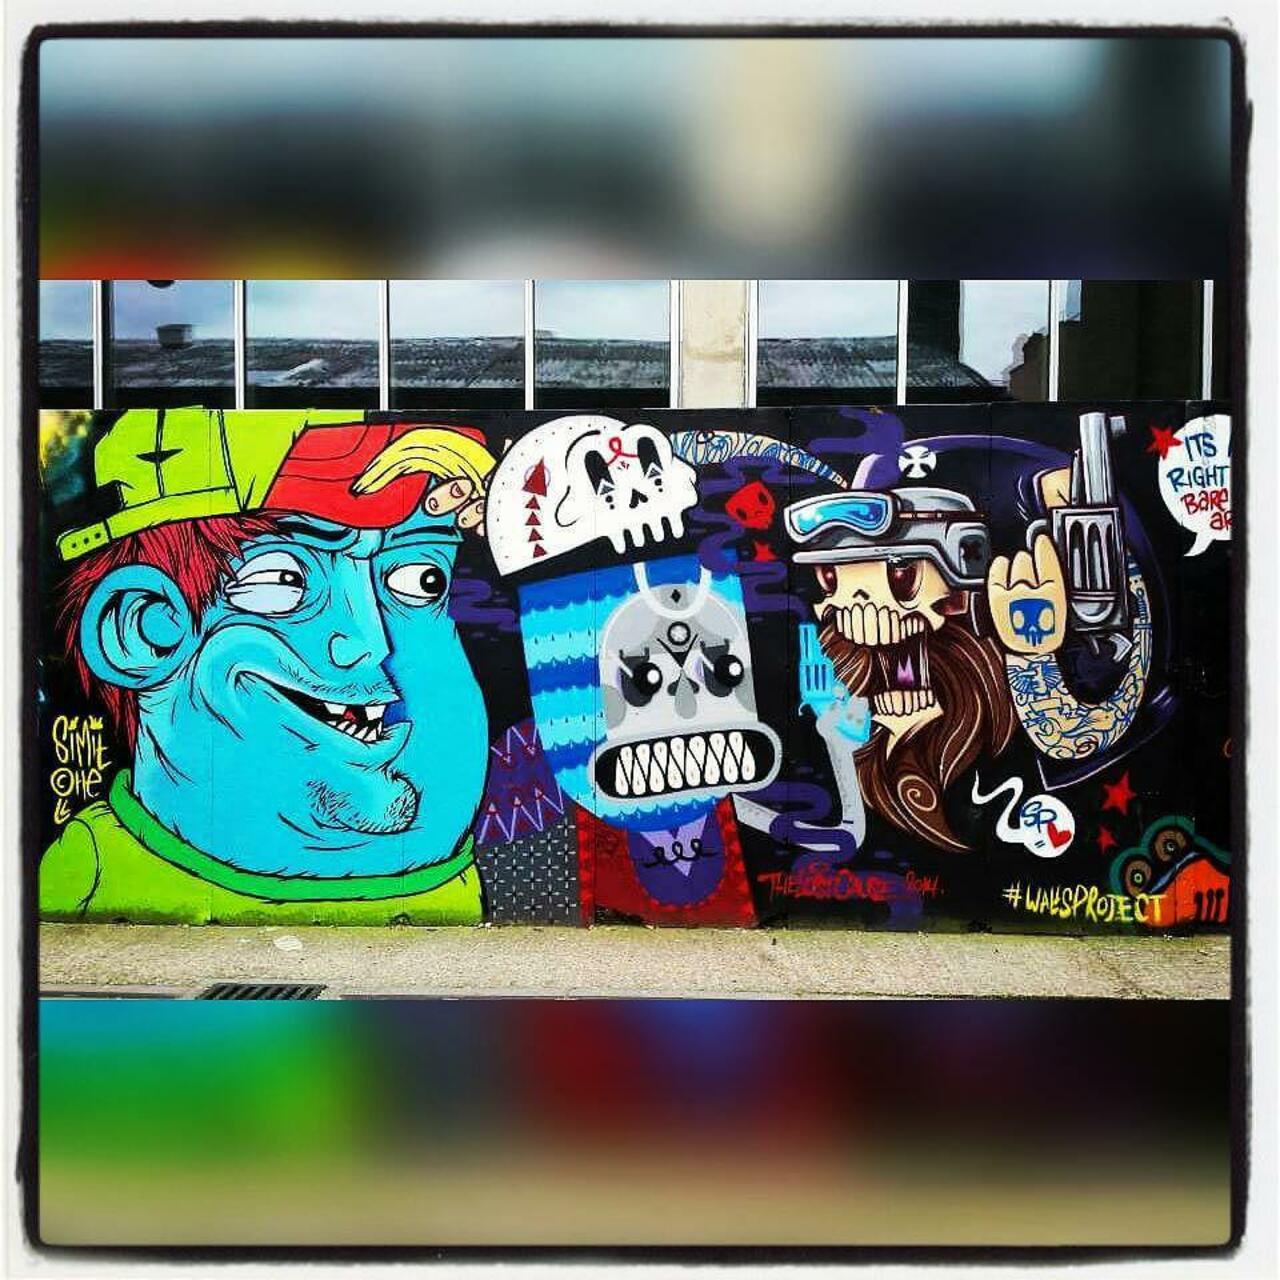 RT @artpushr: via #street_art_hunter "http://bit.ly/1LxIvBF" #graffiti #streetart http://t.co/cG81hem8Su